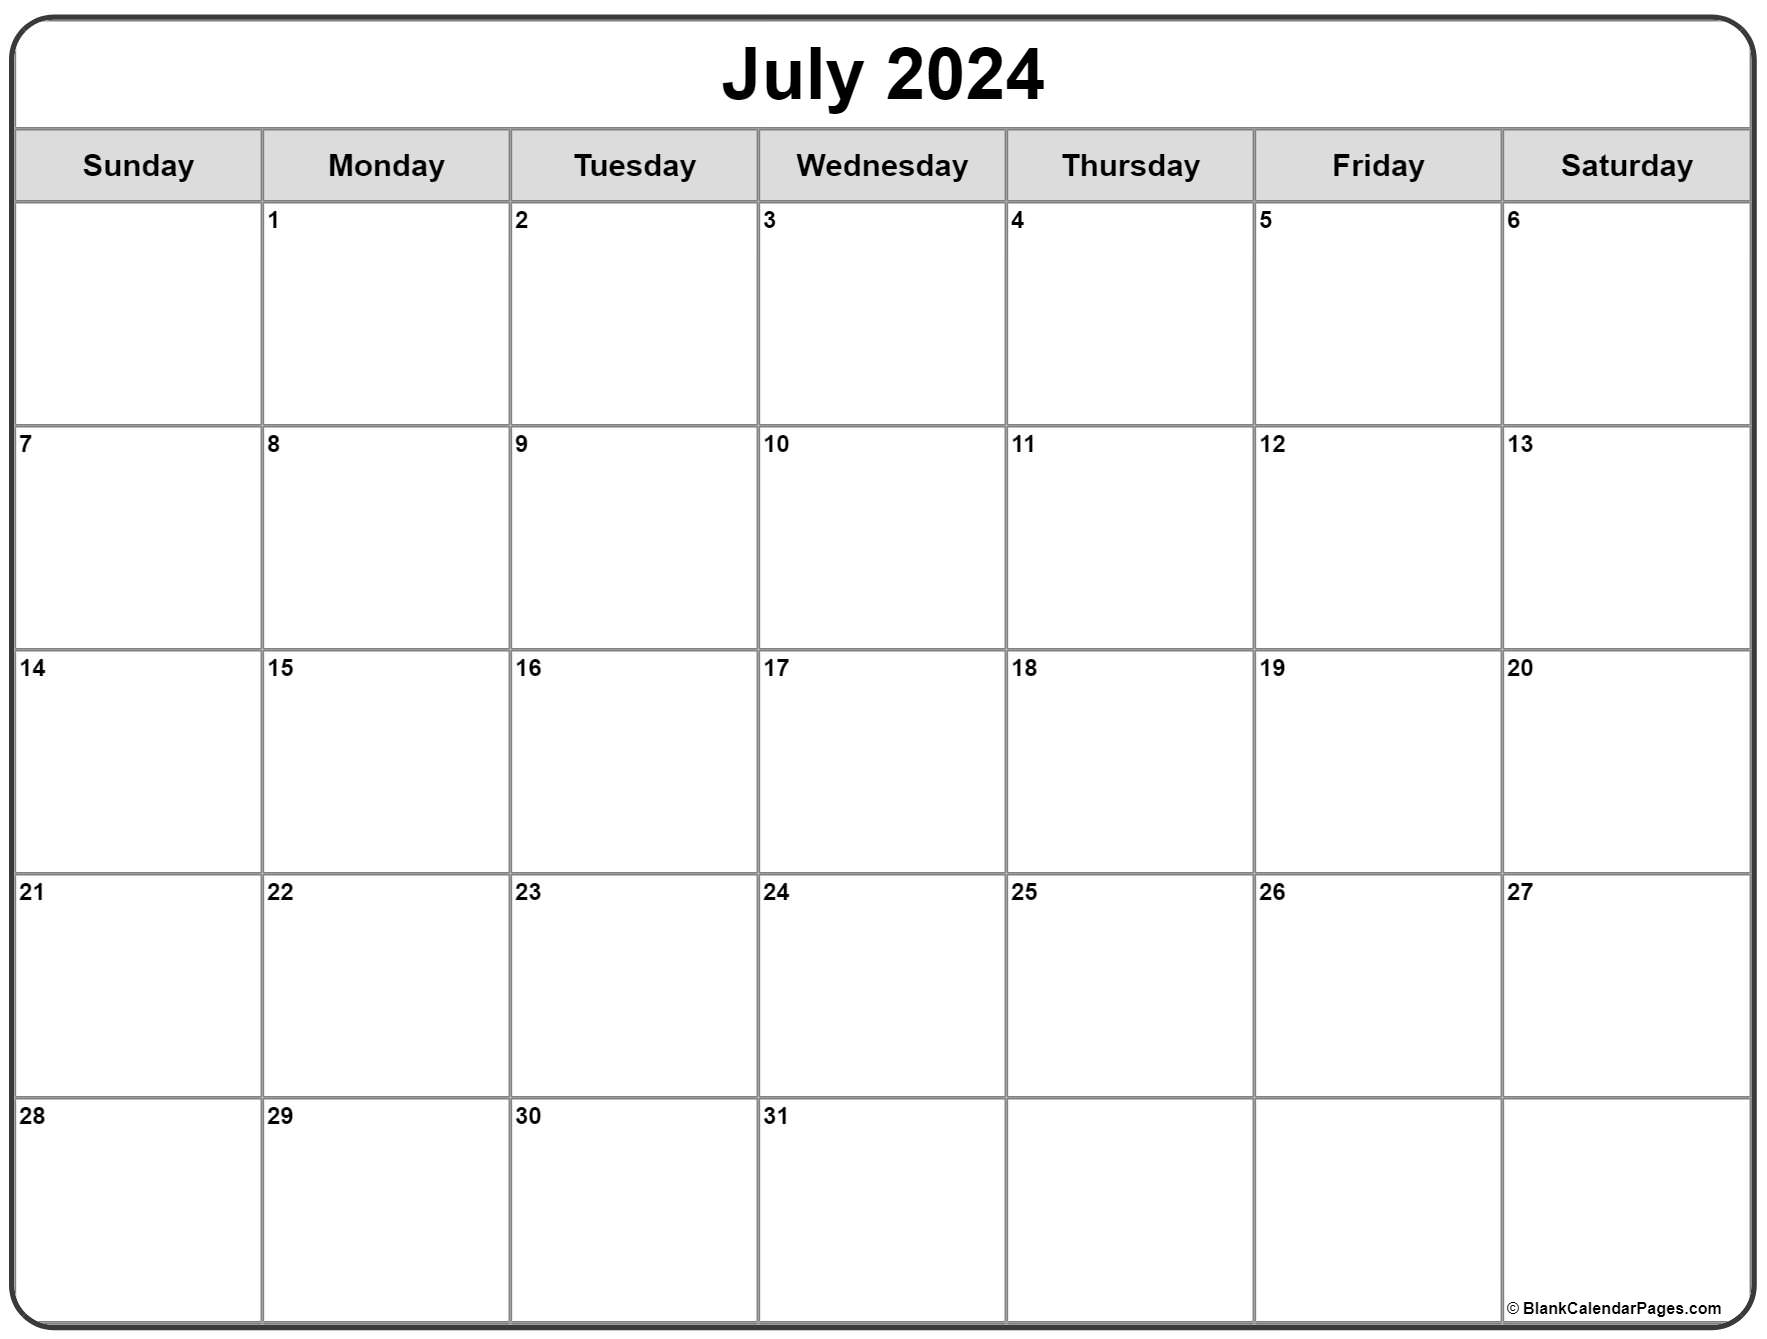 July 2022 calendar free printable calendar